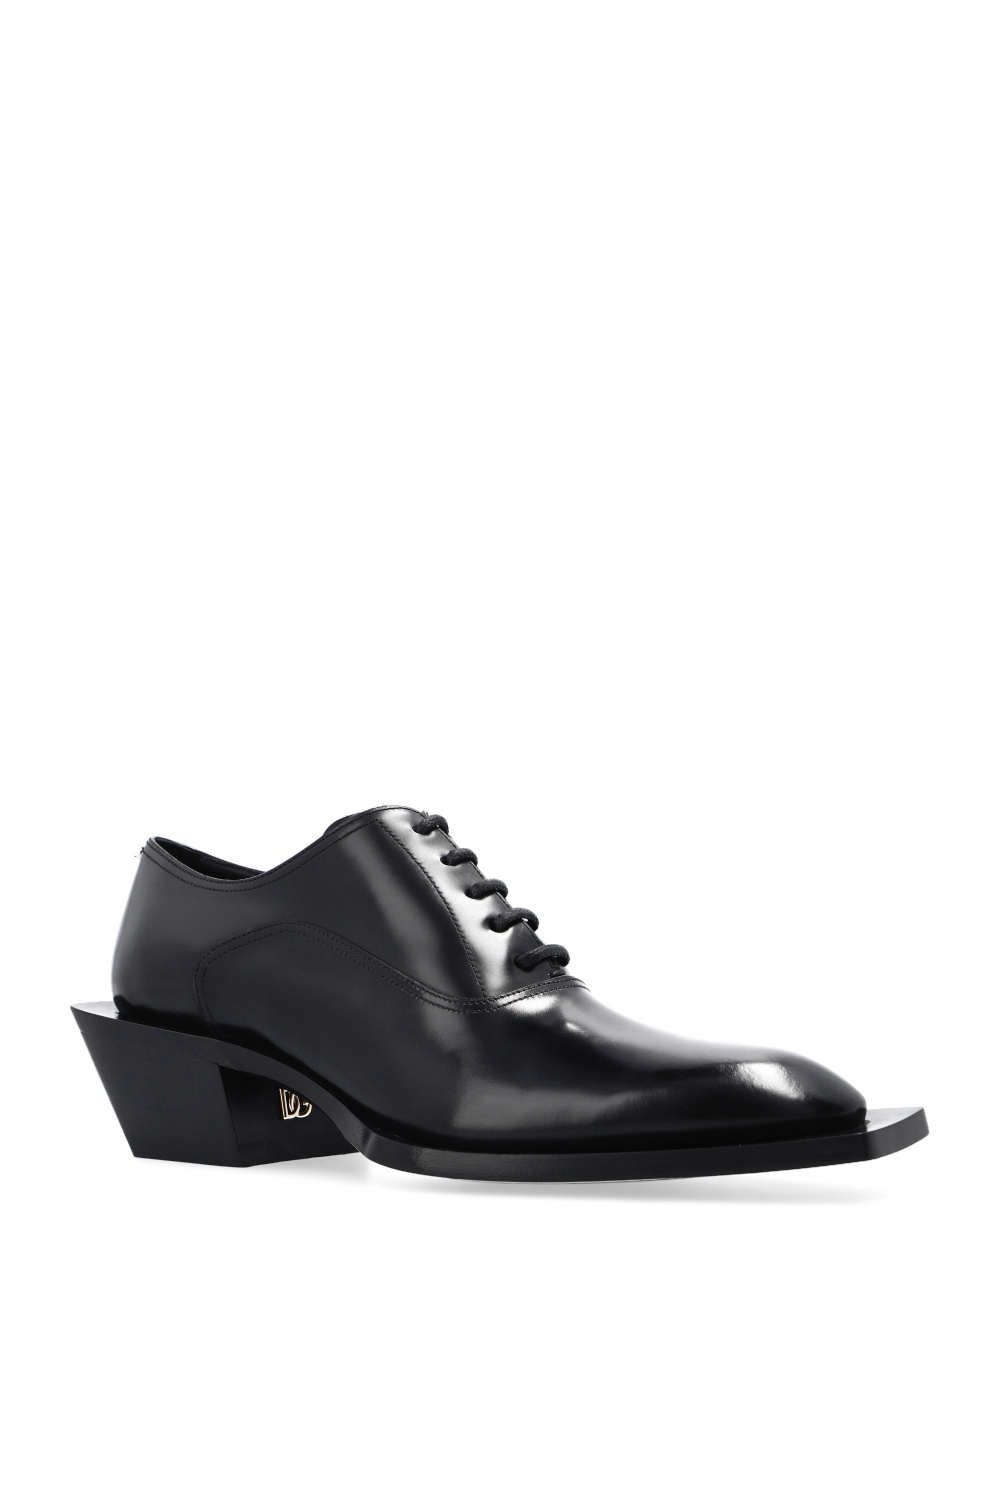 Dolce & Gabbana Oxford shoes